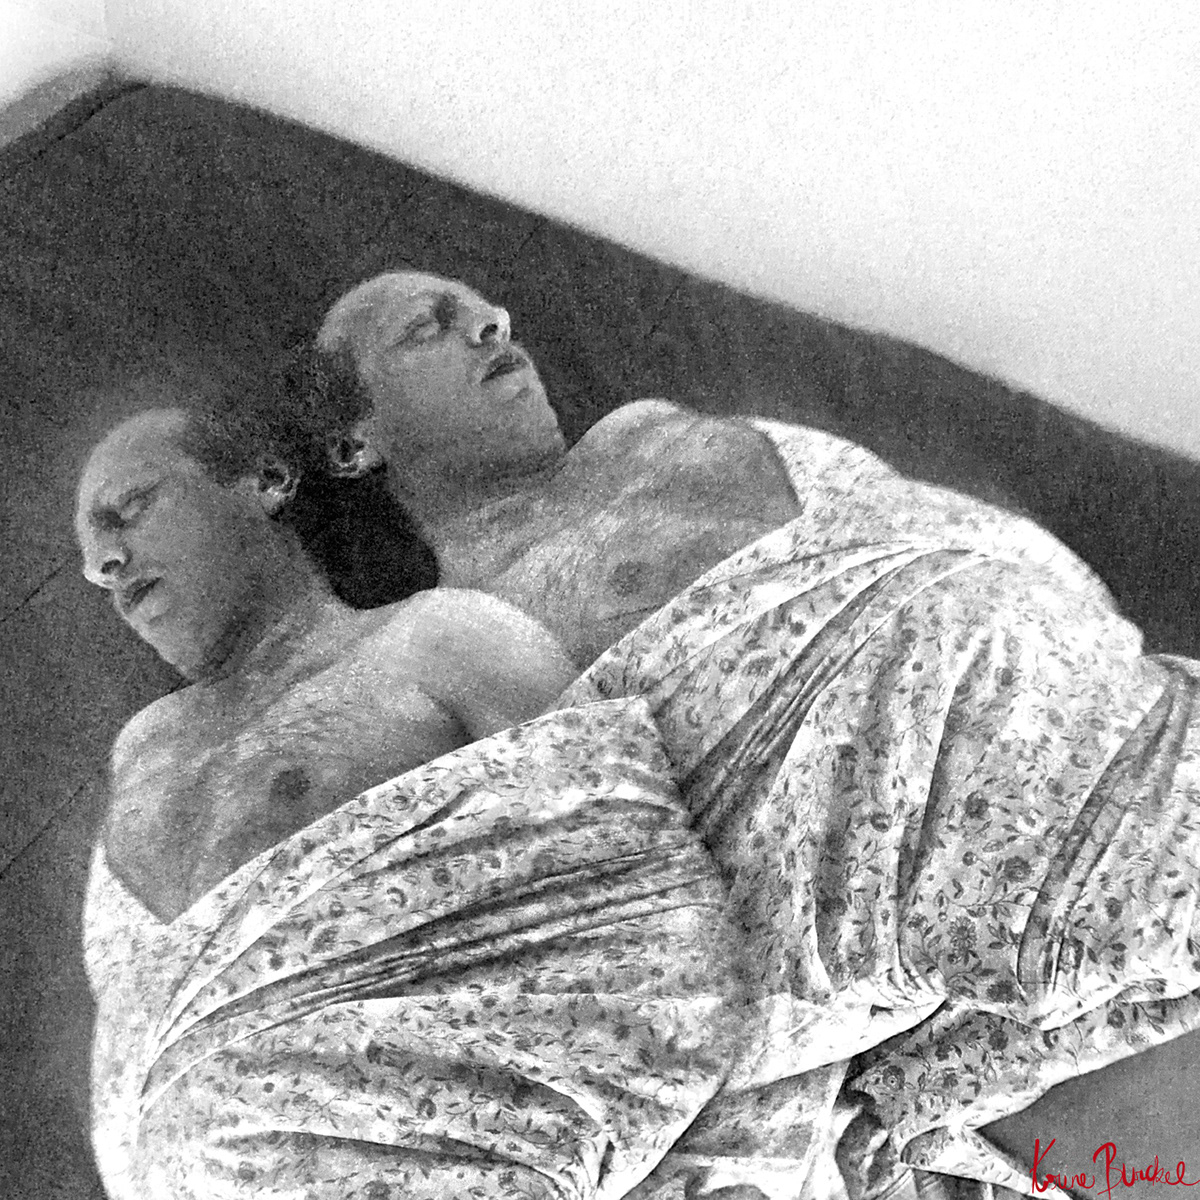 man double surrealistic bw bed K.rine Burckel